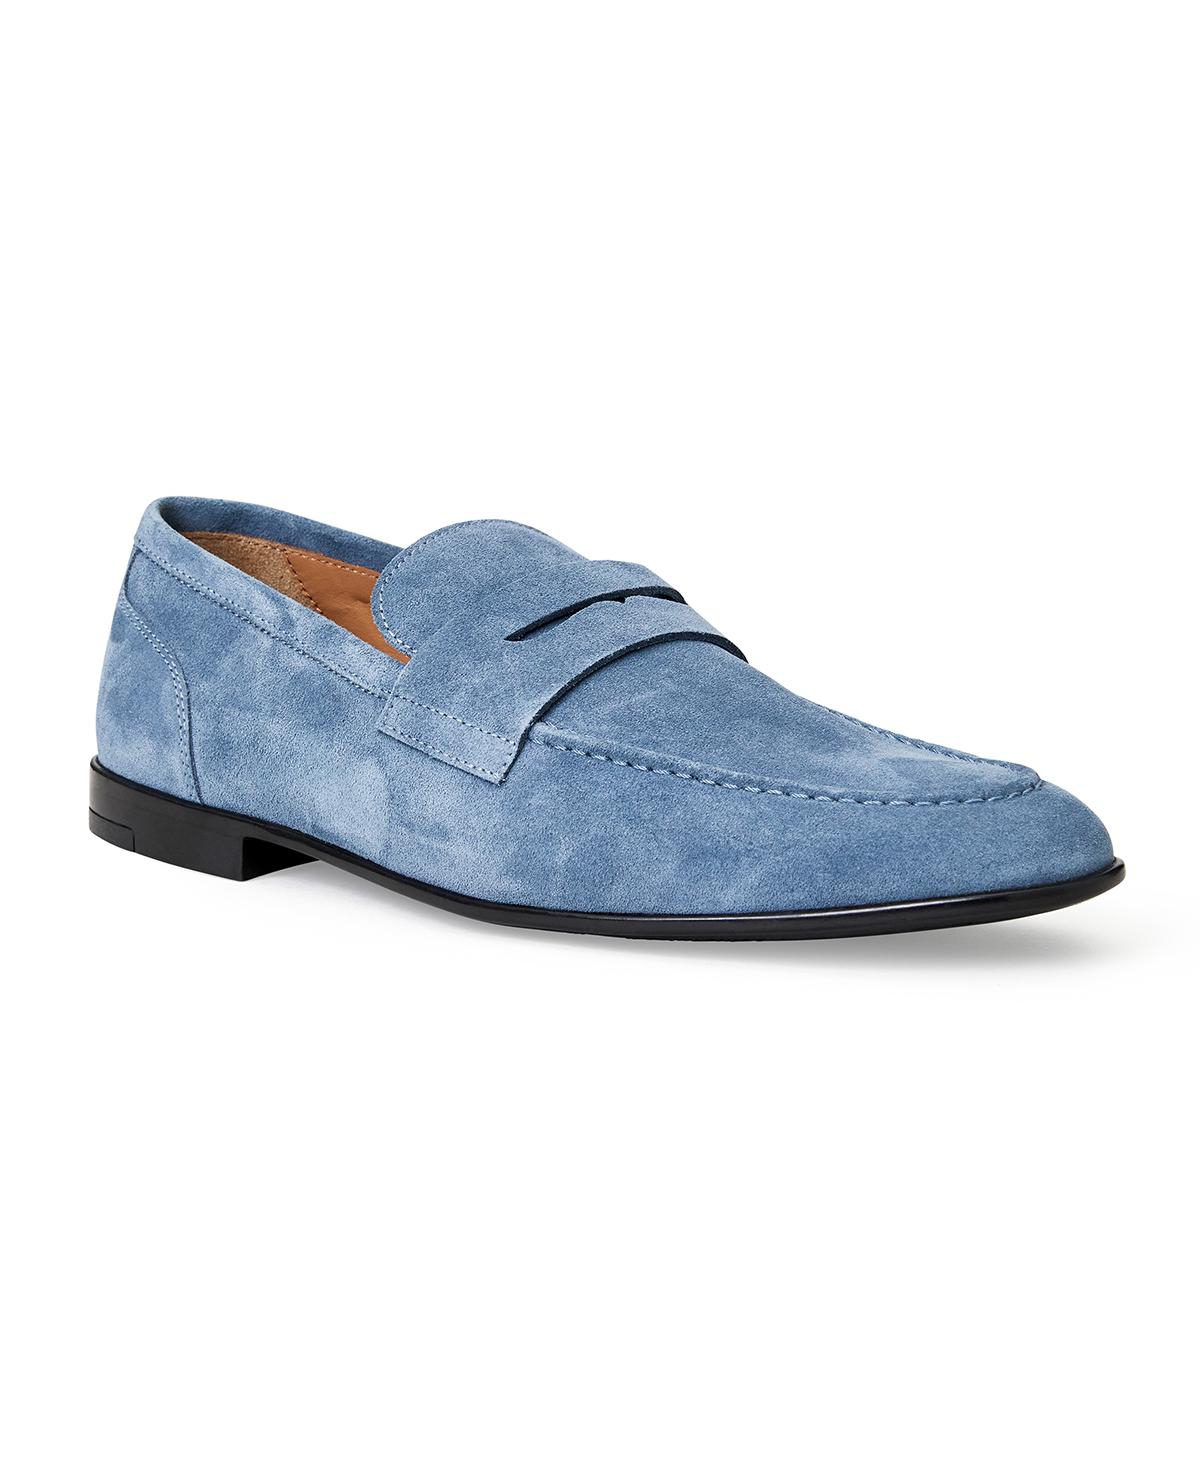 Bruno Magli Men's Lastra Slip On Loafers Men's Shoes